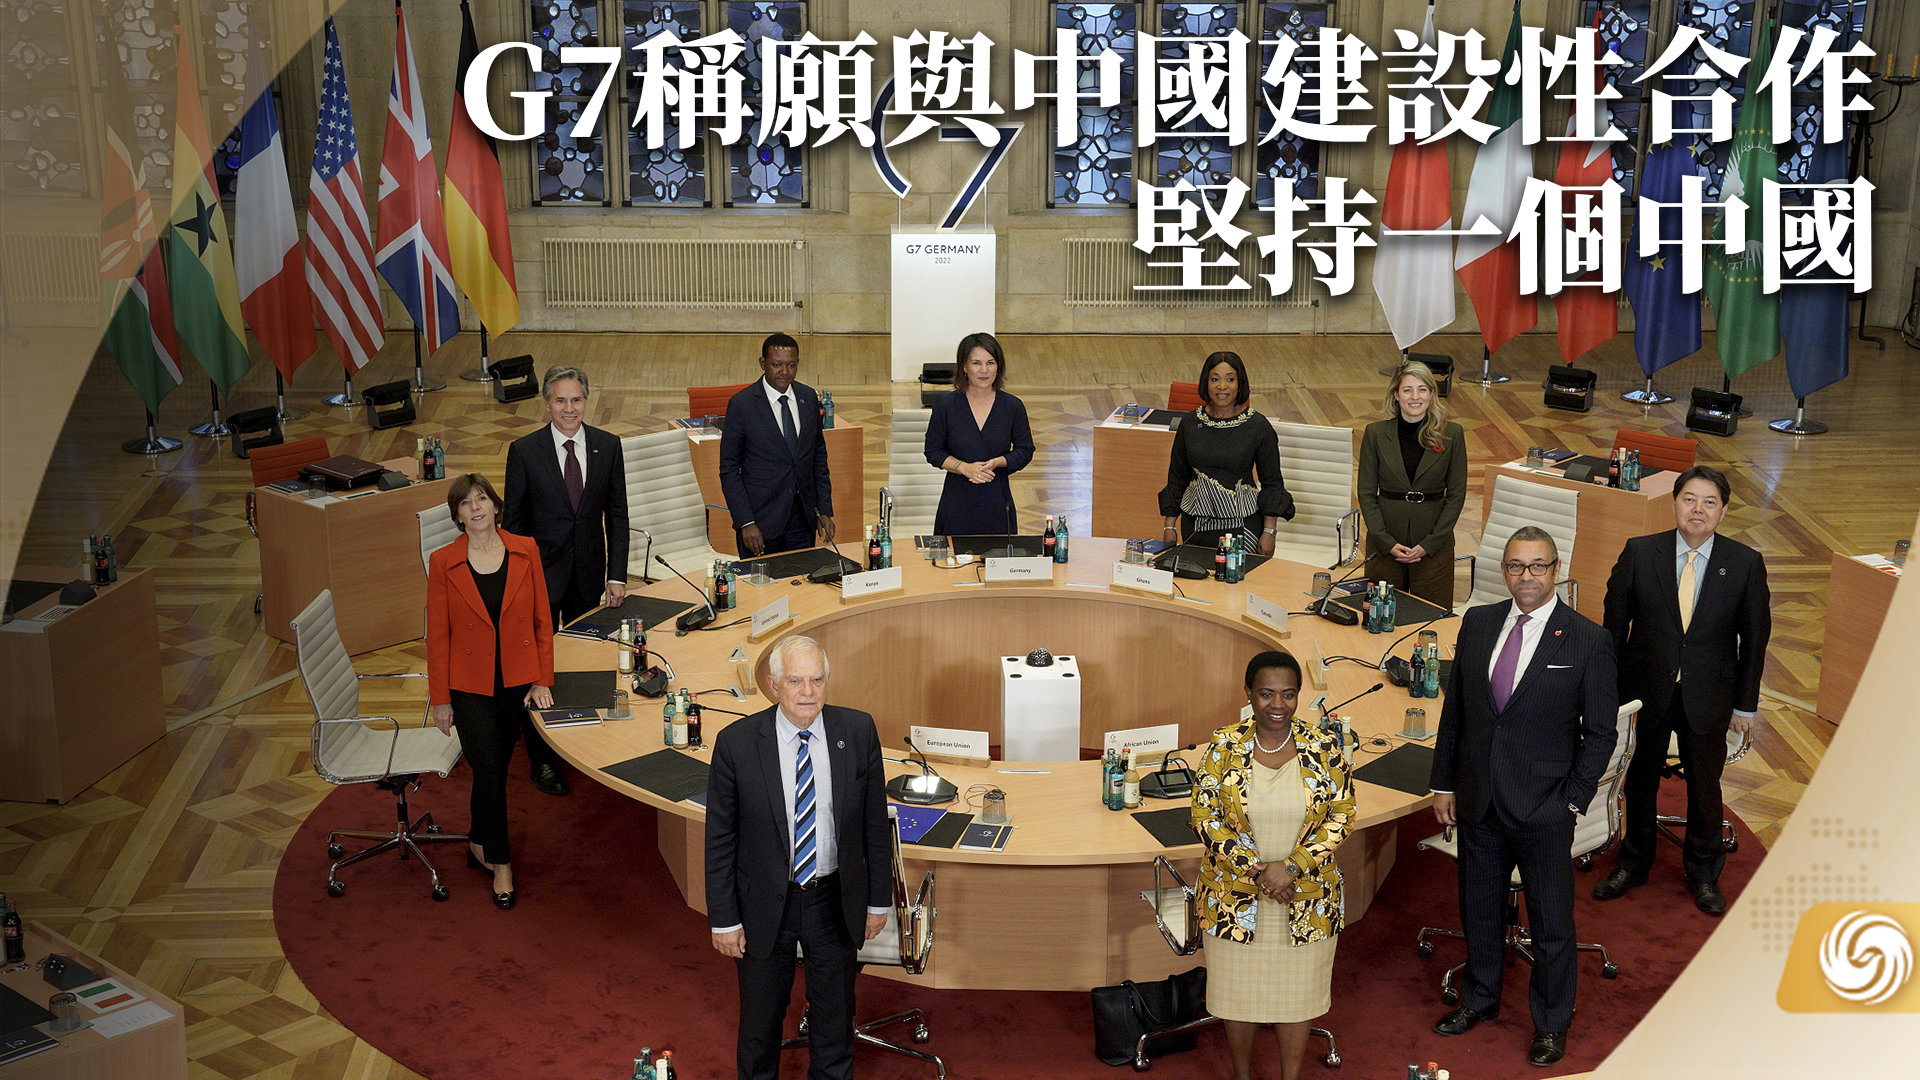 G7称愿与中国建设性合作 坚持一个中国